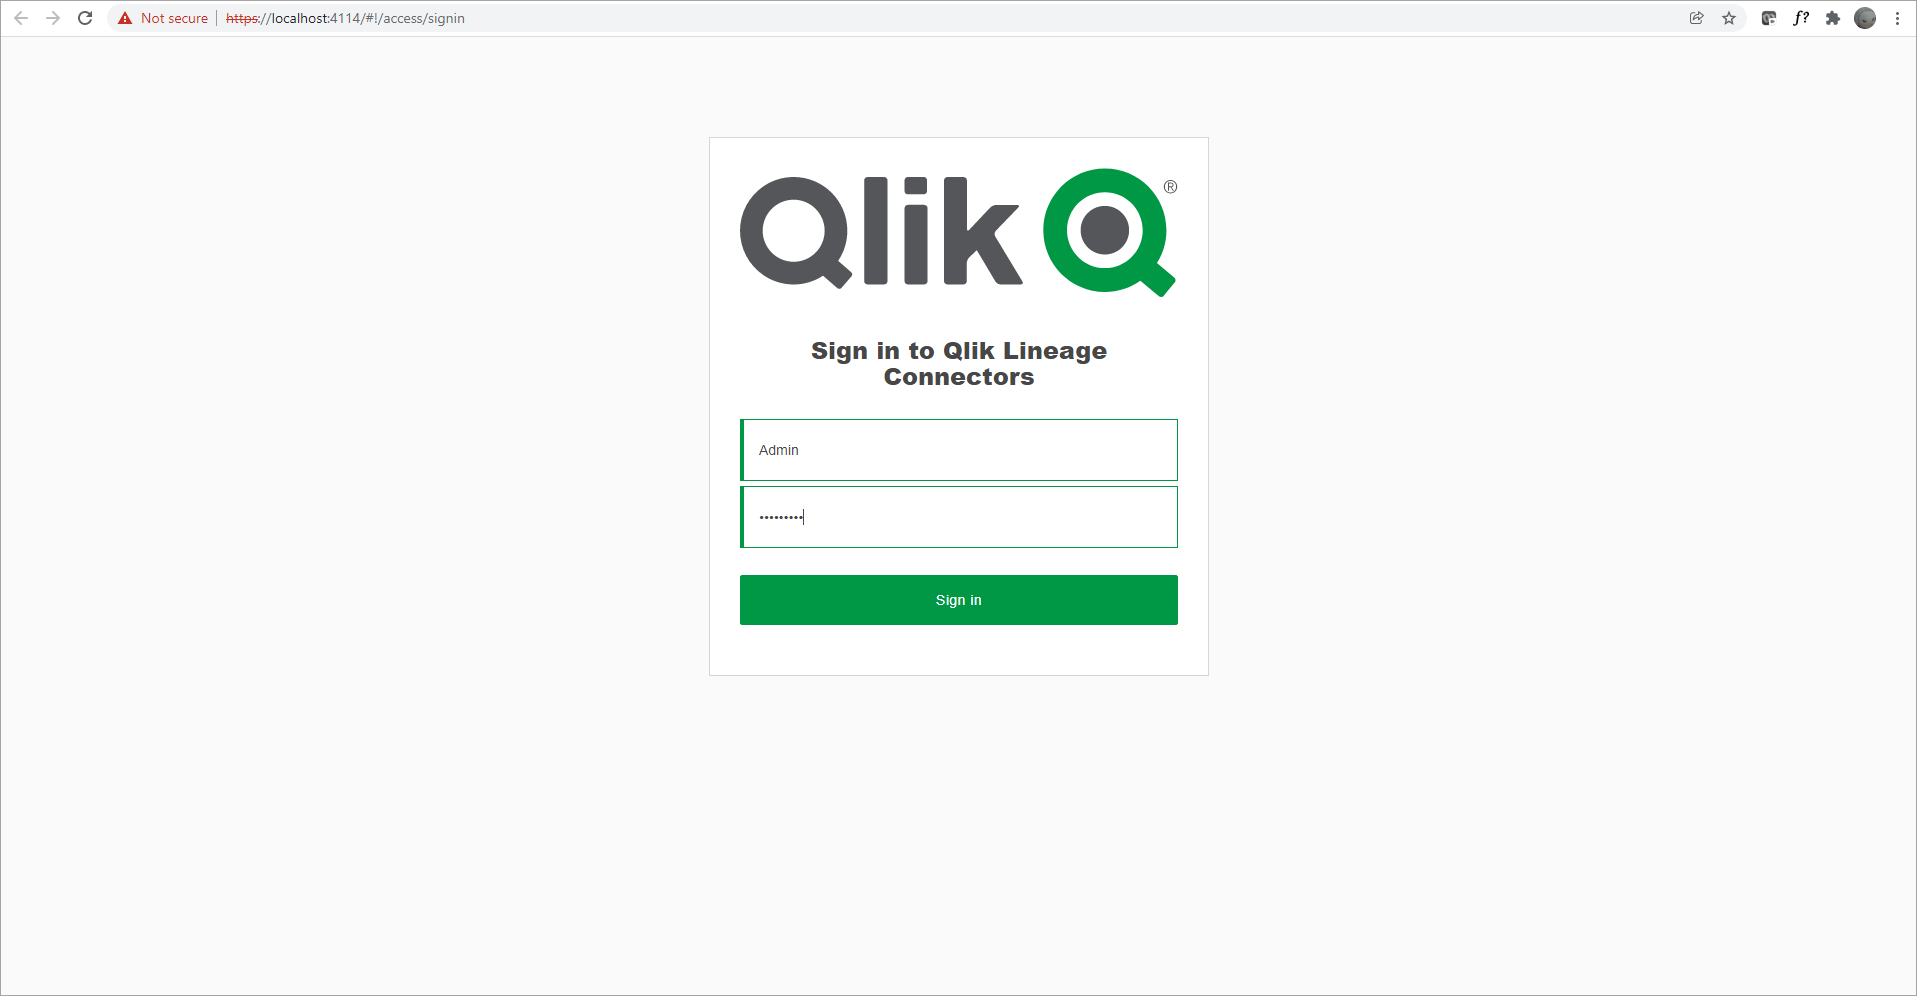 sign into Qlik Lineage Connectors webpage with admin credentials